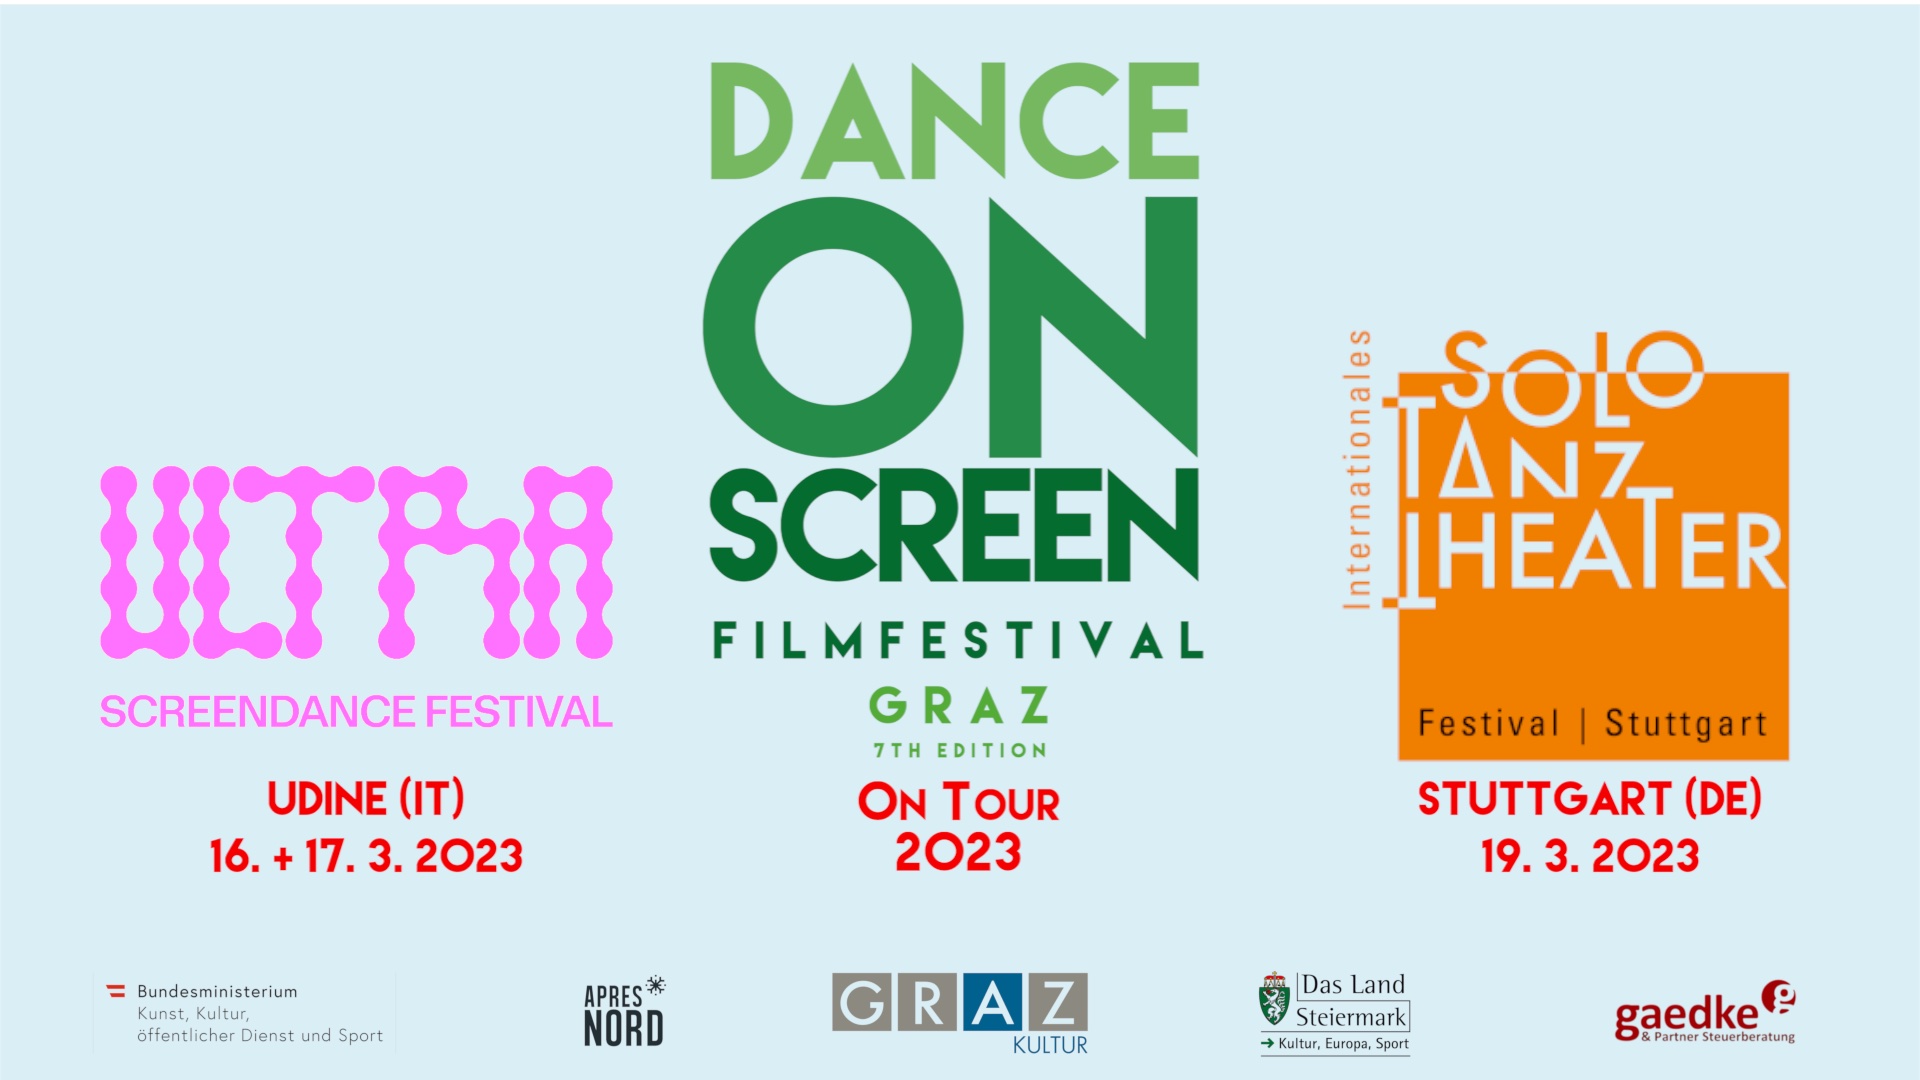 Dance On Screen FilmFestival On Tour 2023